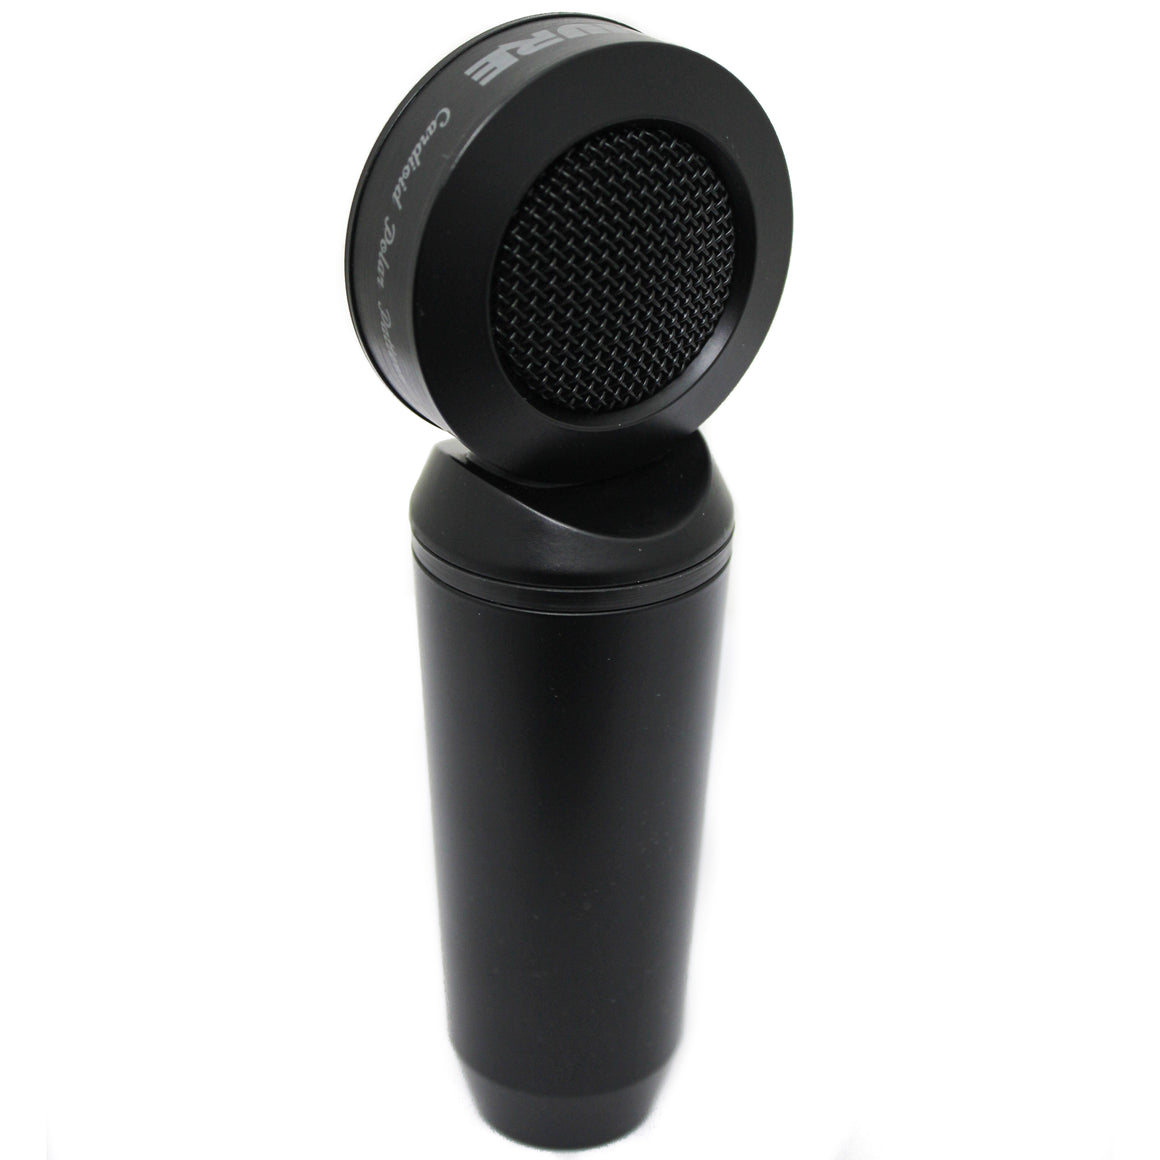 Shure PGA181 Side-Address Cardioid Condenser Microphone